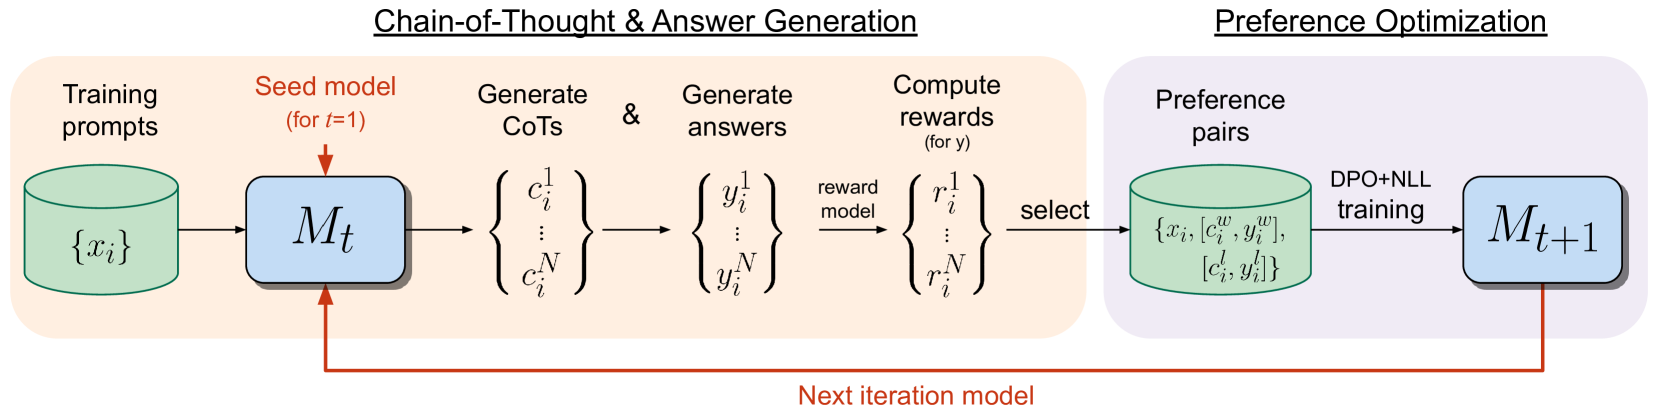 Iterative Reasoning Preference Optimization